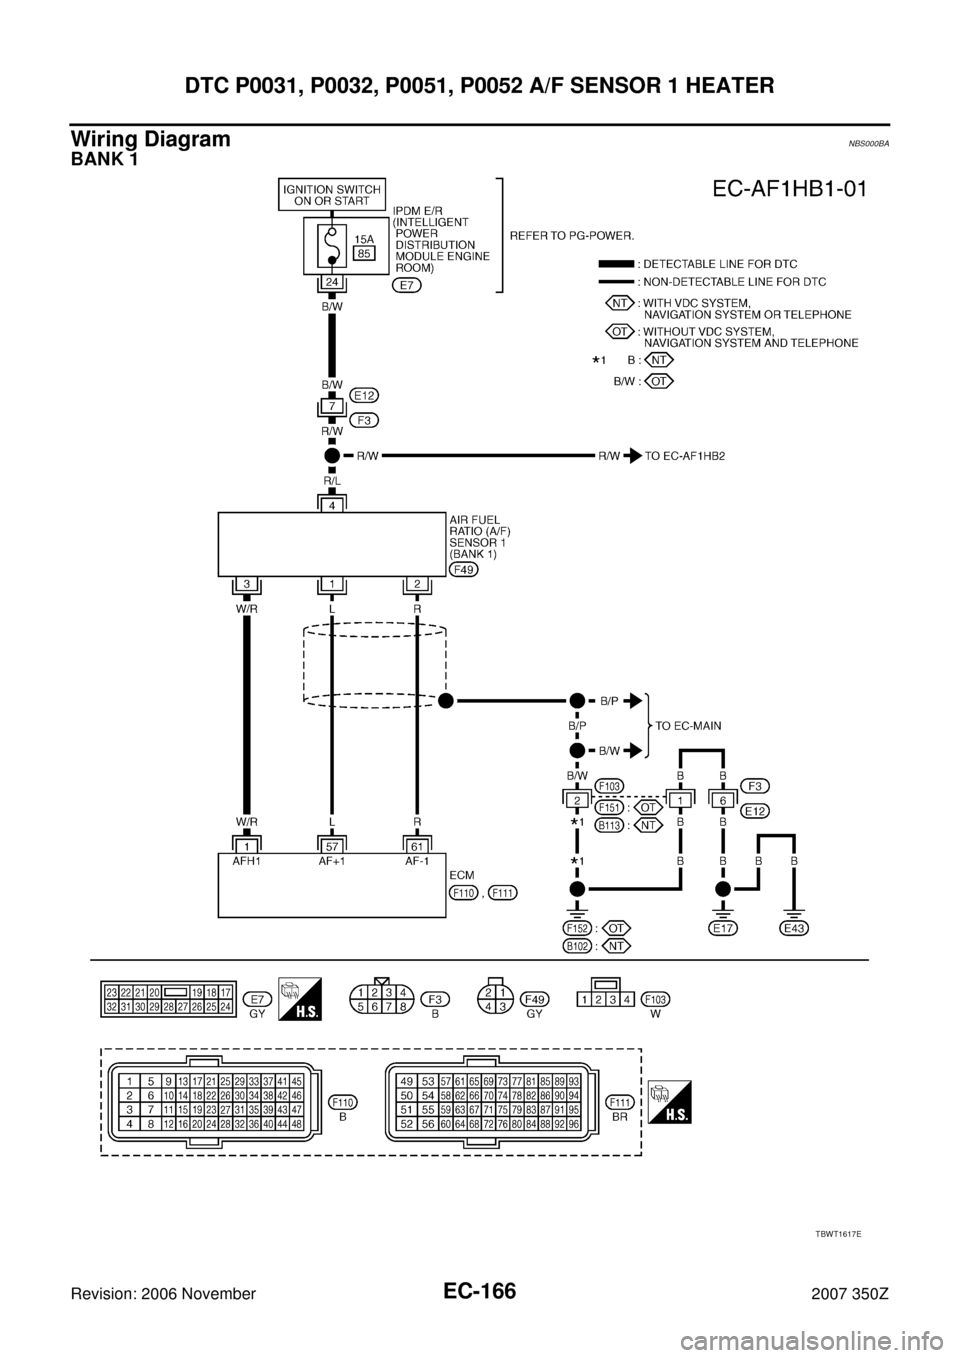 NISSAN 350Z 2007 Z33 Engine Control Workshop Manual EC-166
DTC P0031, P0032, P0051, P0052 A/F SENSOR 1 HEATER
Revision: 2006 November2007 350Z
Wiring DiagramNBS000BA
BANK 1
TBWT1617E 